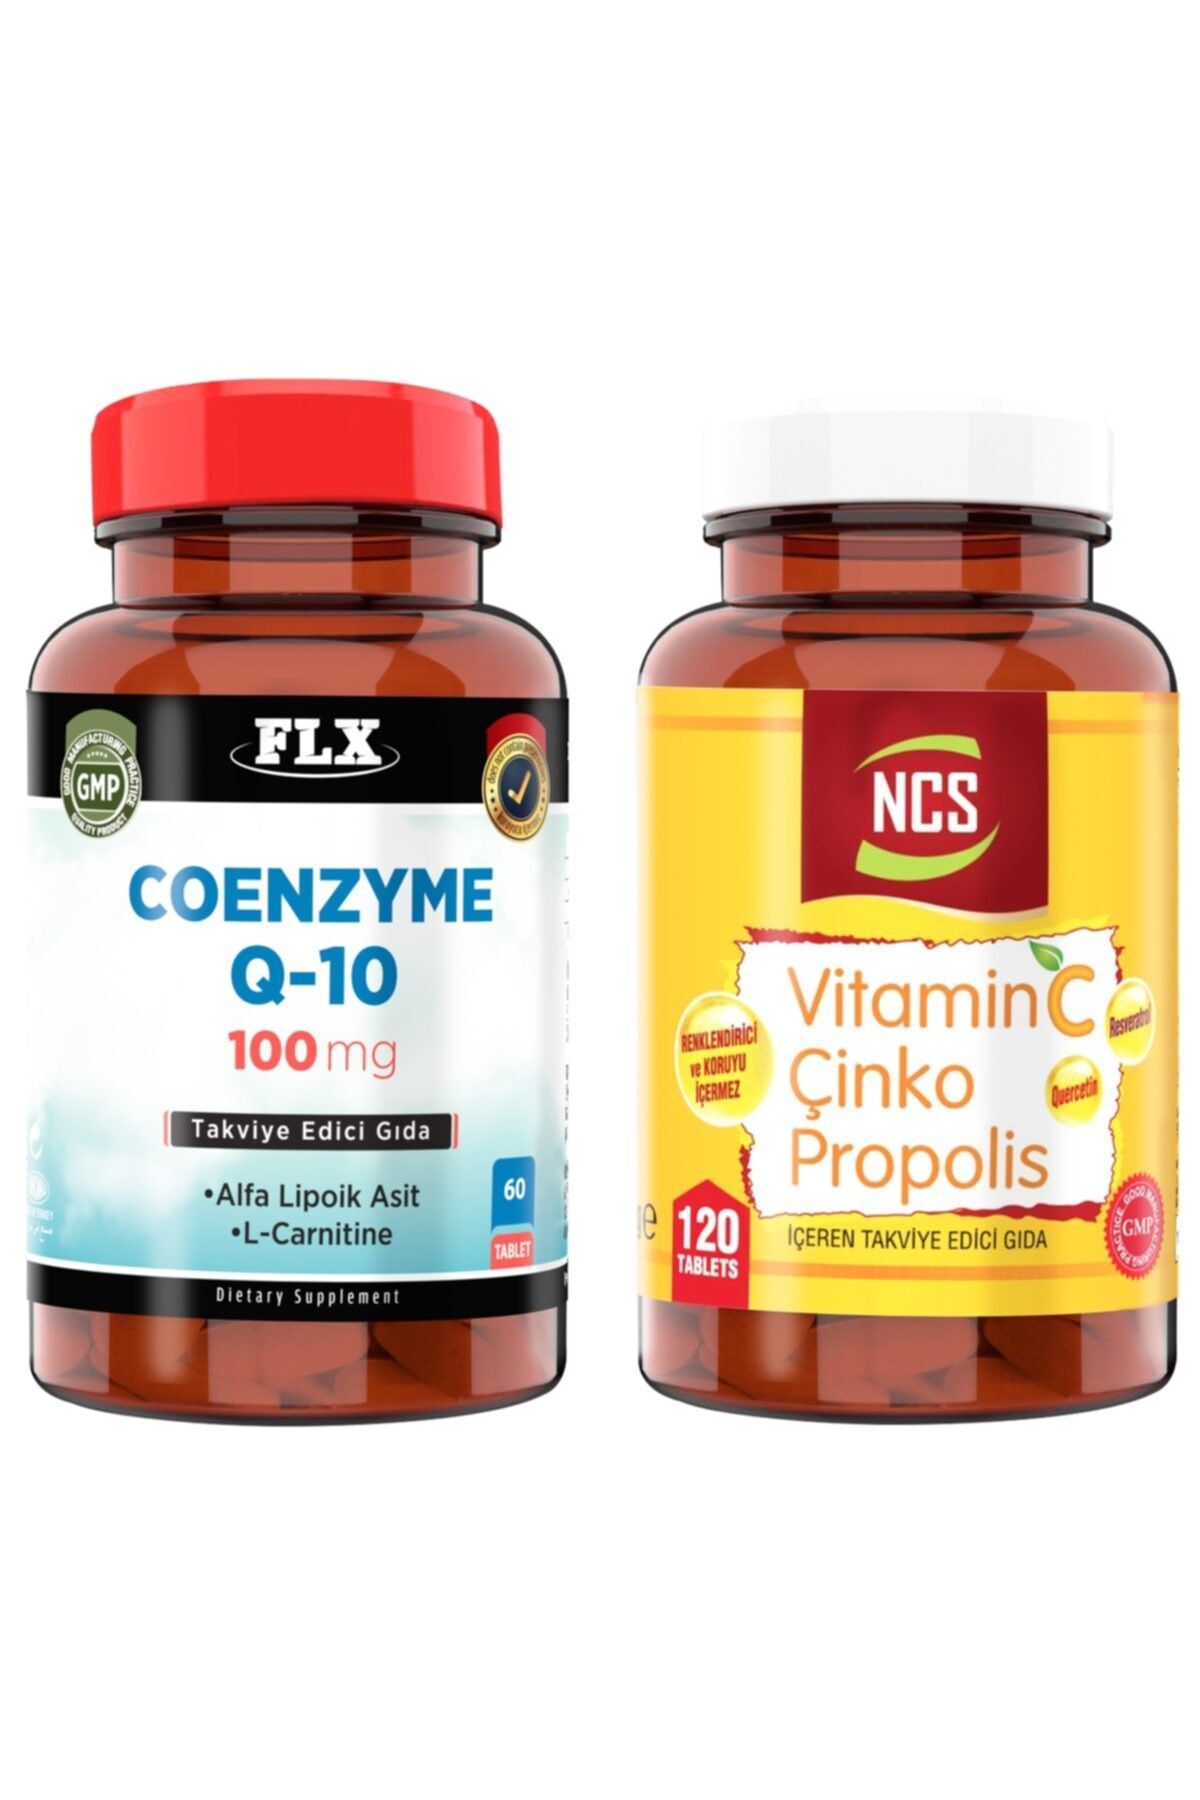 Ncs Flx Coenzyme Q-10 100 Mg 60 Tablet + Vitamin C Çinko Propolis 120 Tablet